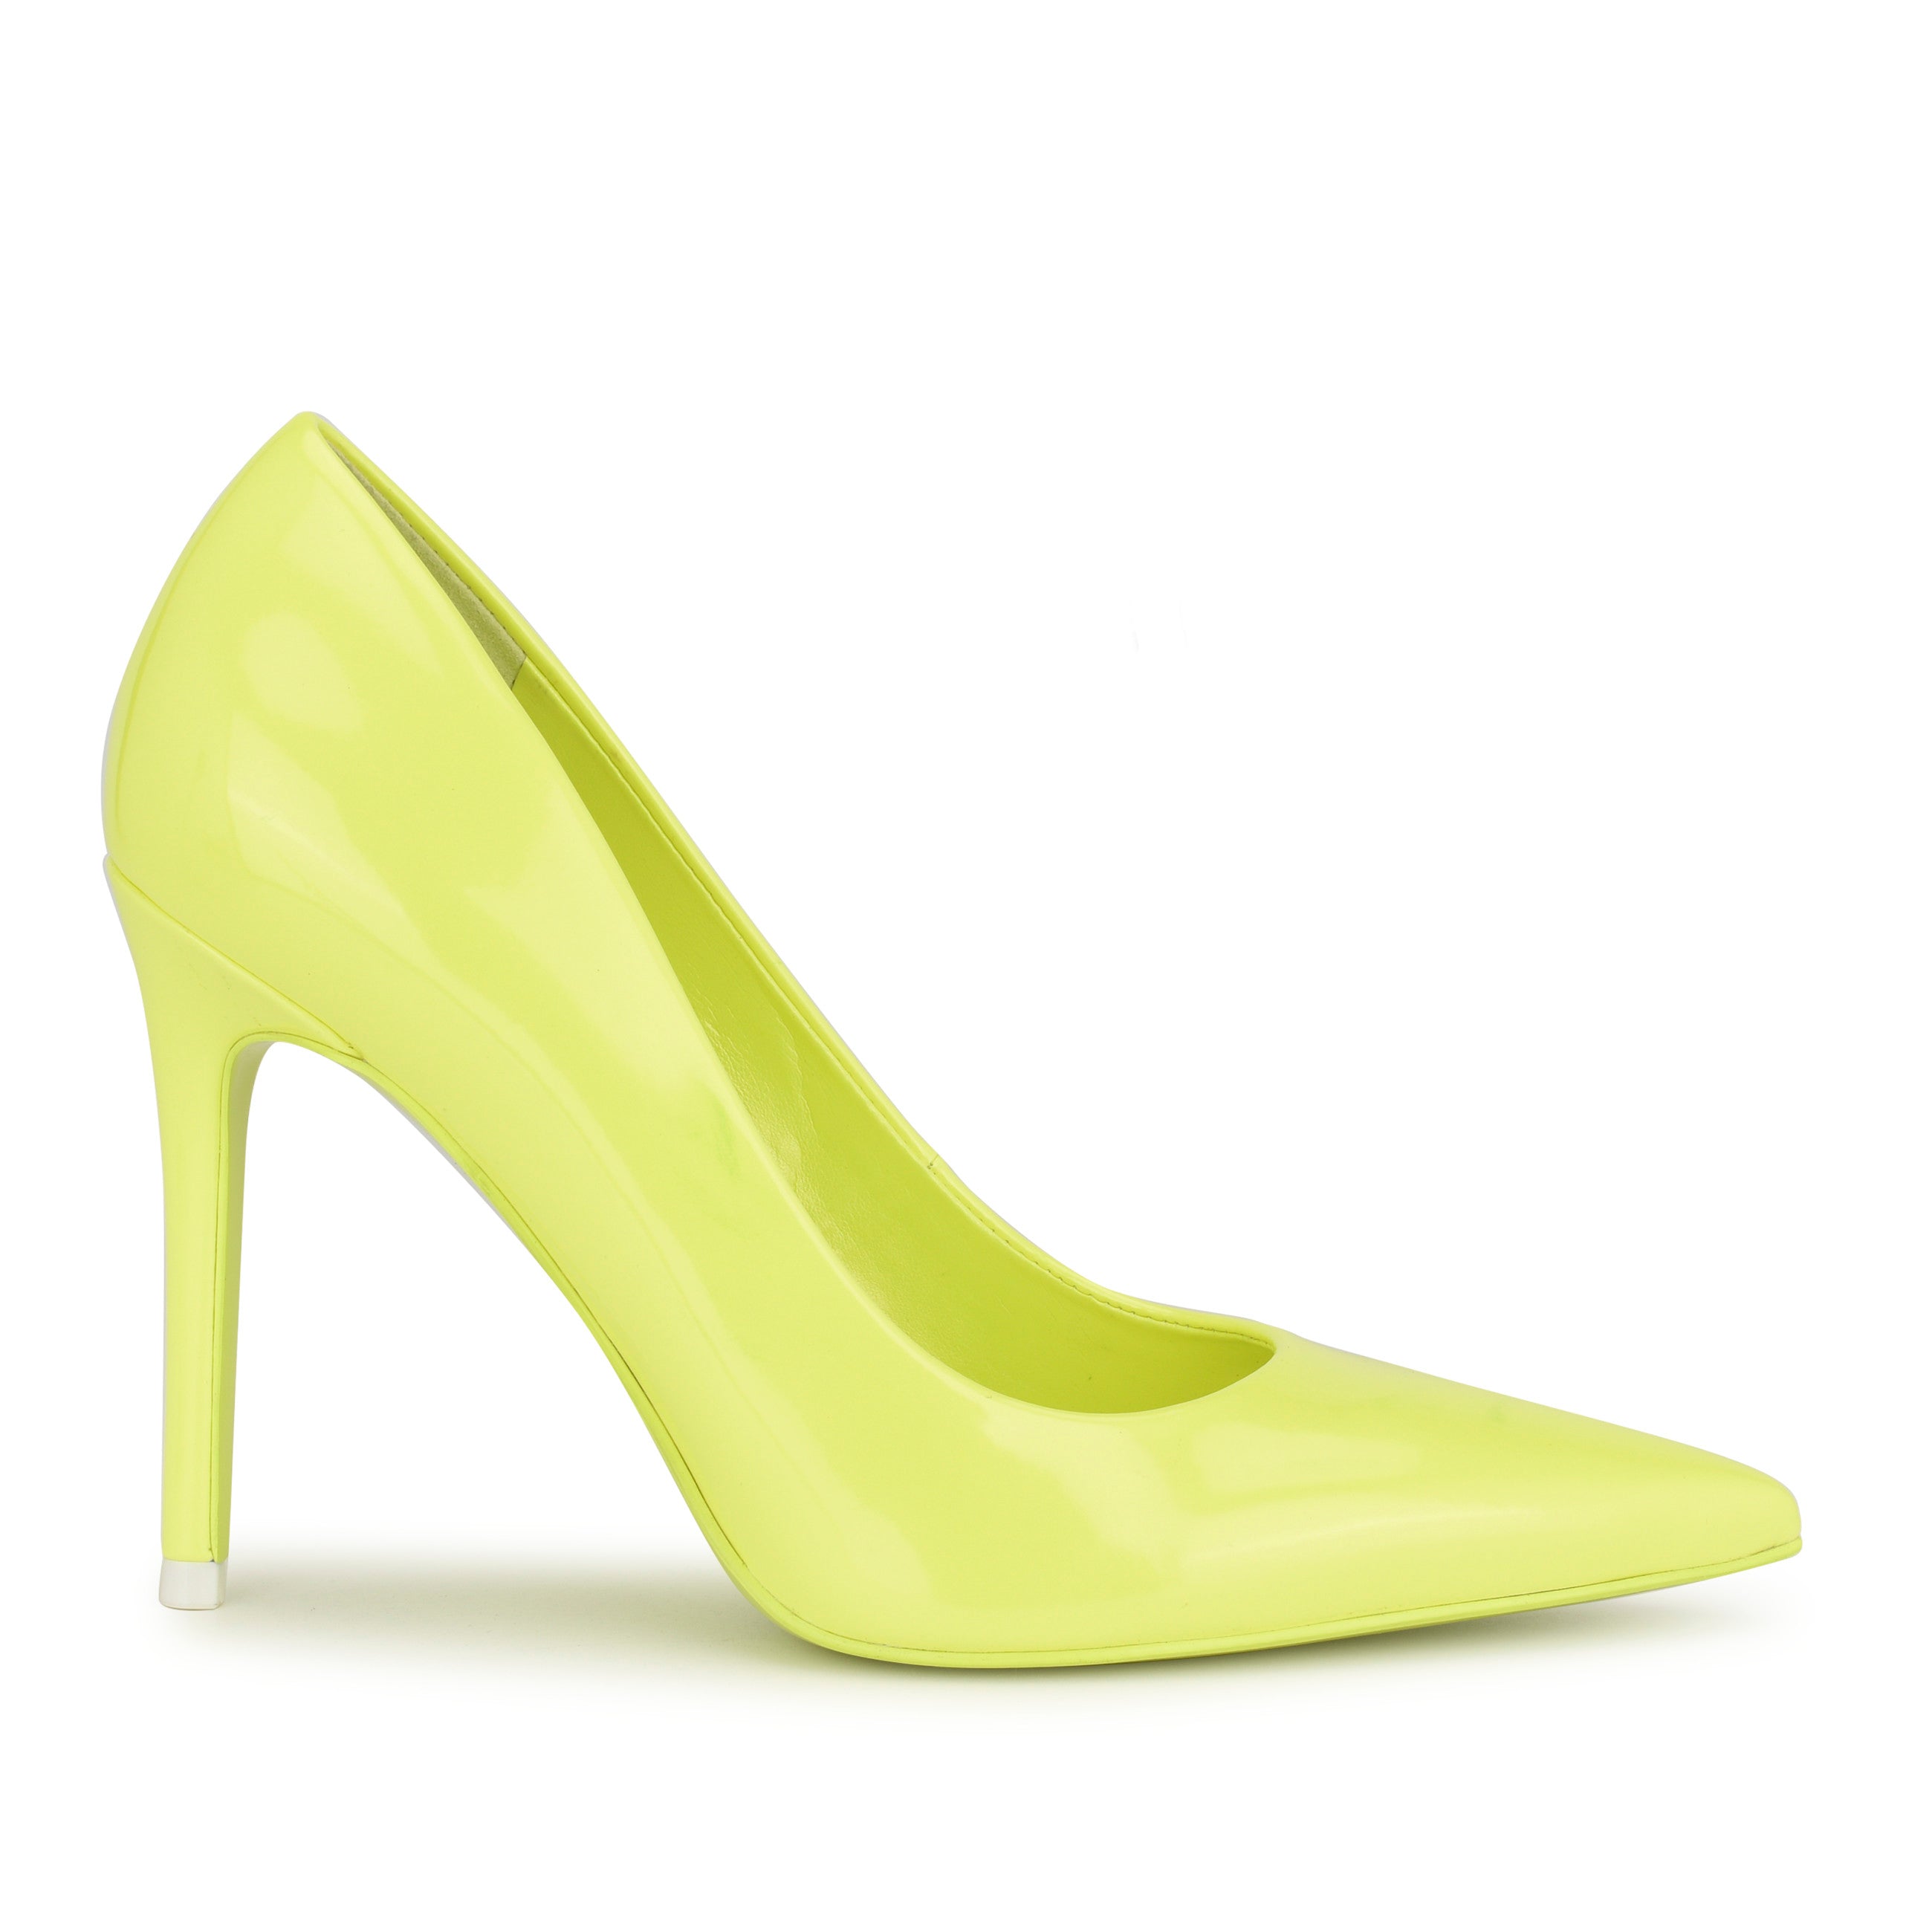 Buy Sherrif Shoes Womens Yellow Stiletto Pumps Online